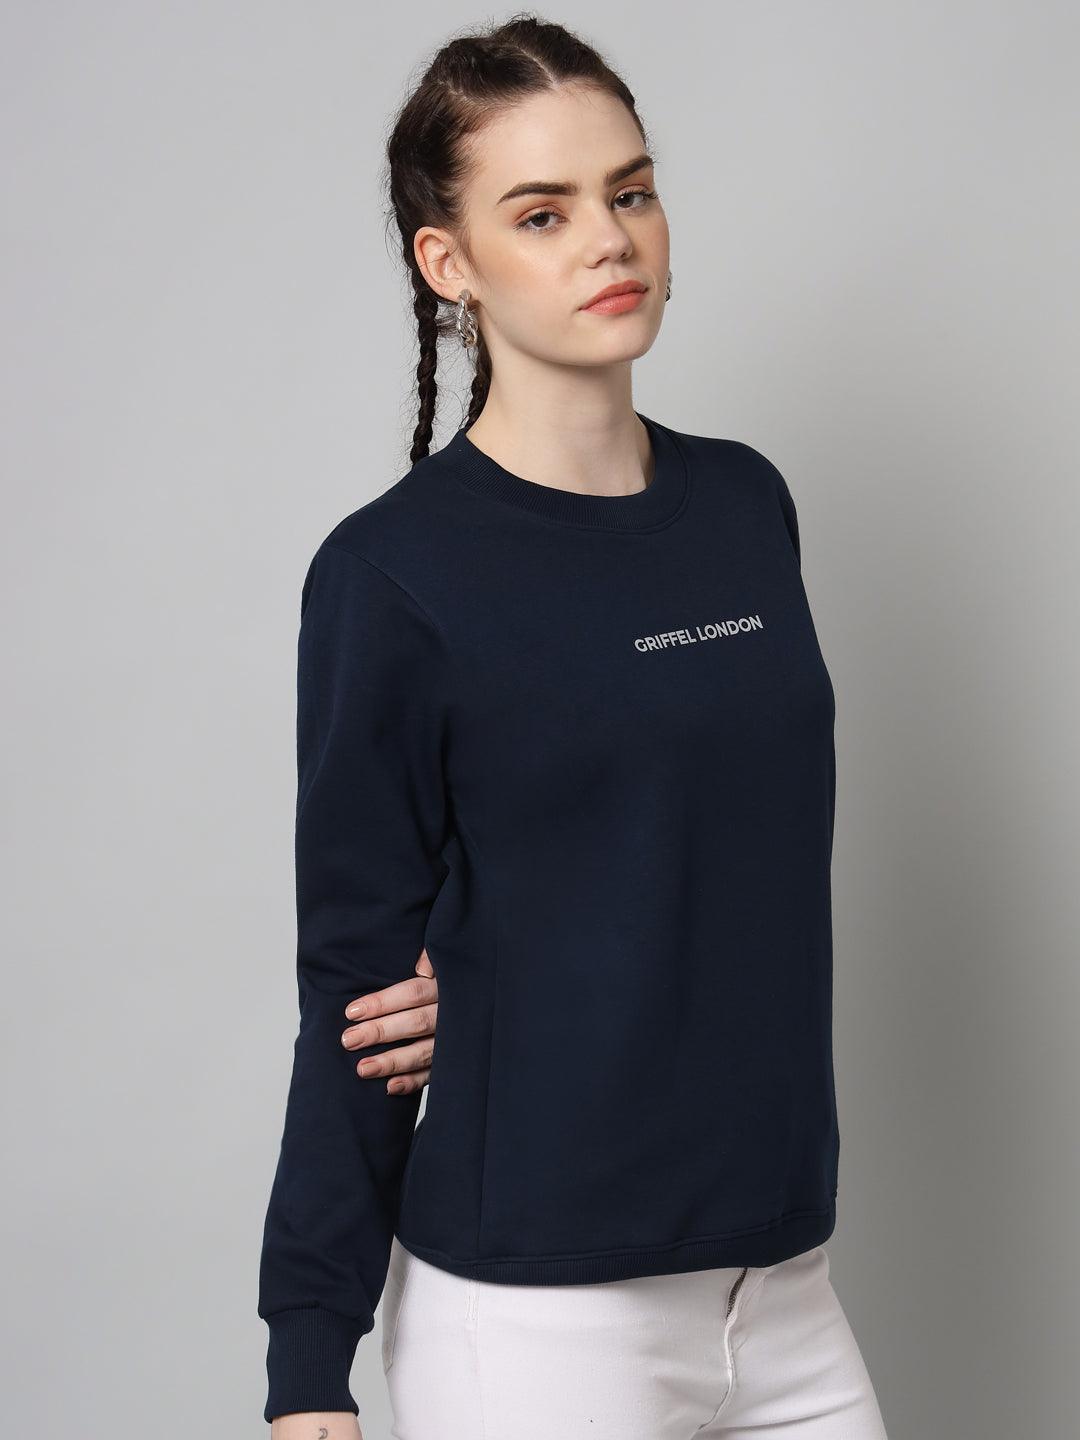 Griffel Women’s Printed Round Neck Navy Cotton Fleece Full Sleeve Sweatshirt - griffel